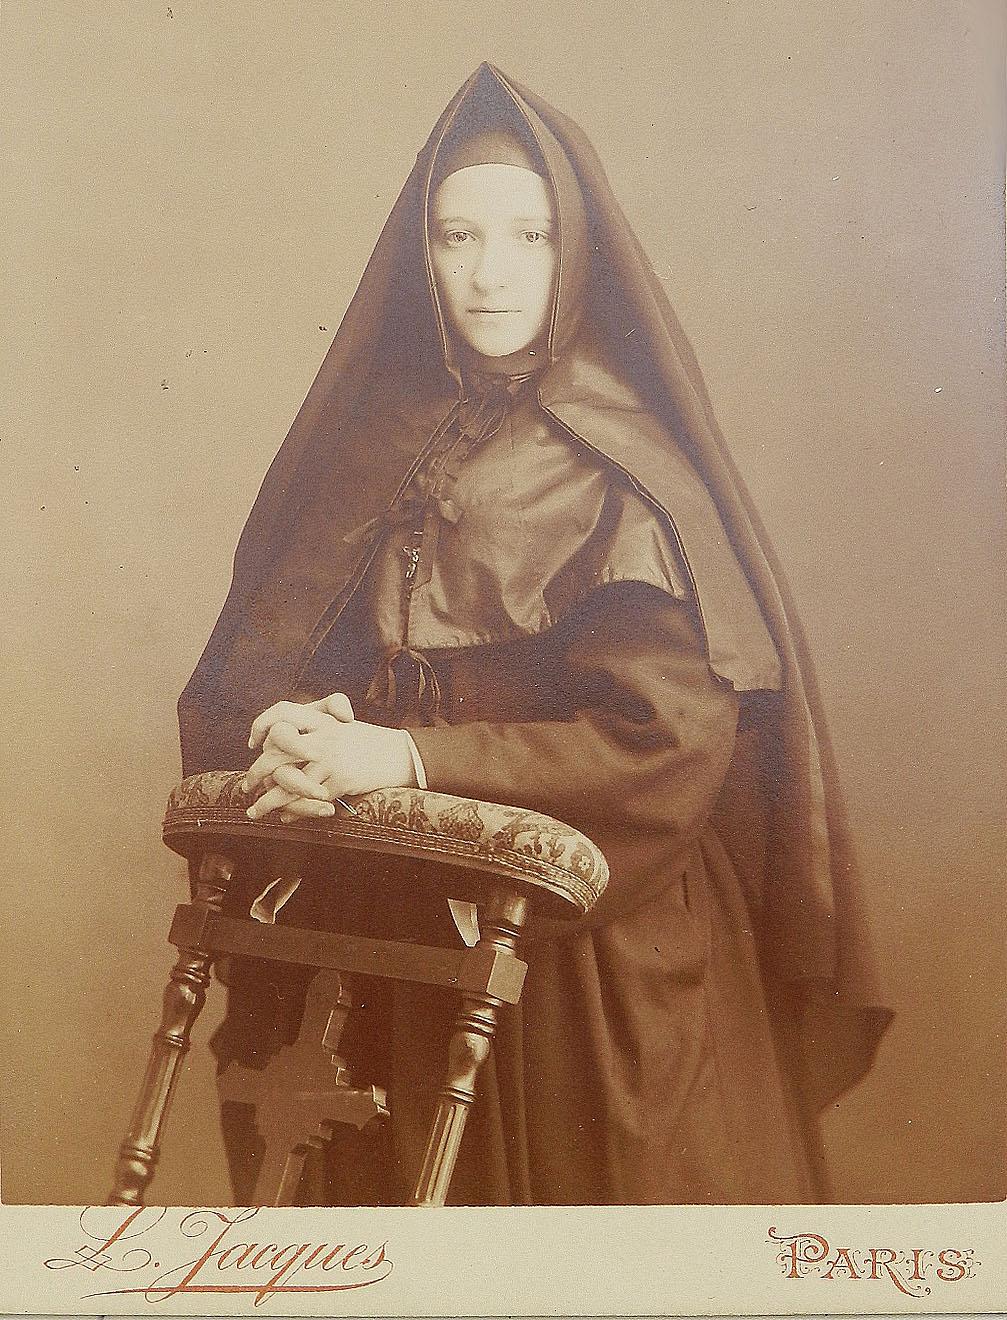 Unknown Portrait Photograph - Antique Photograph of a Young French Nun Sepia toned by L Jacques Paris Sepia 